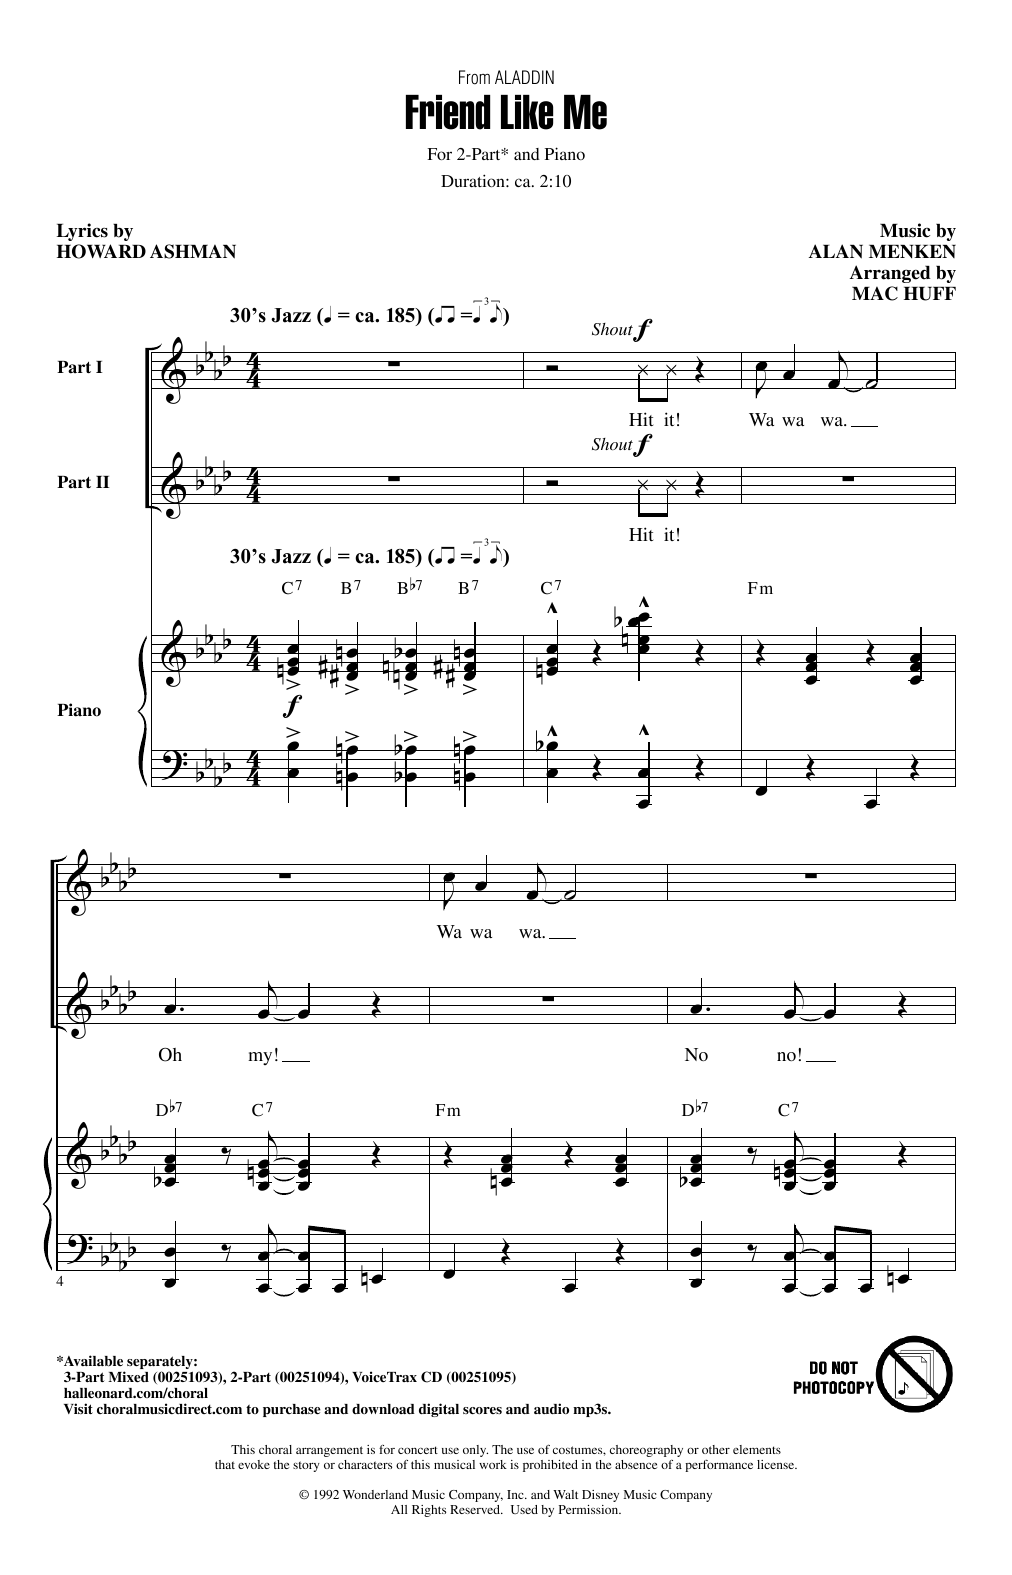 Alan Menken Friend Like Me (from Aladdin) (arr. Mac Huff) Sheet Music Notes & Chords for 2-Part Choir - Download or Print PDF